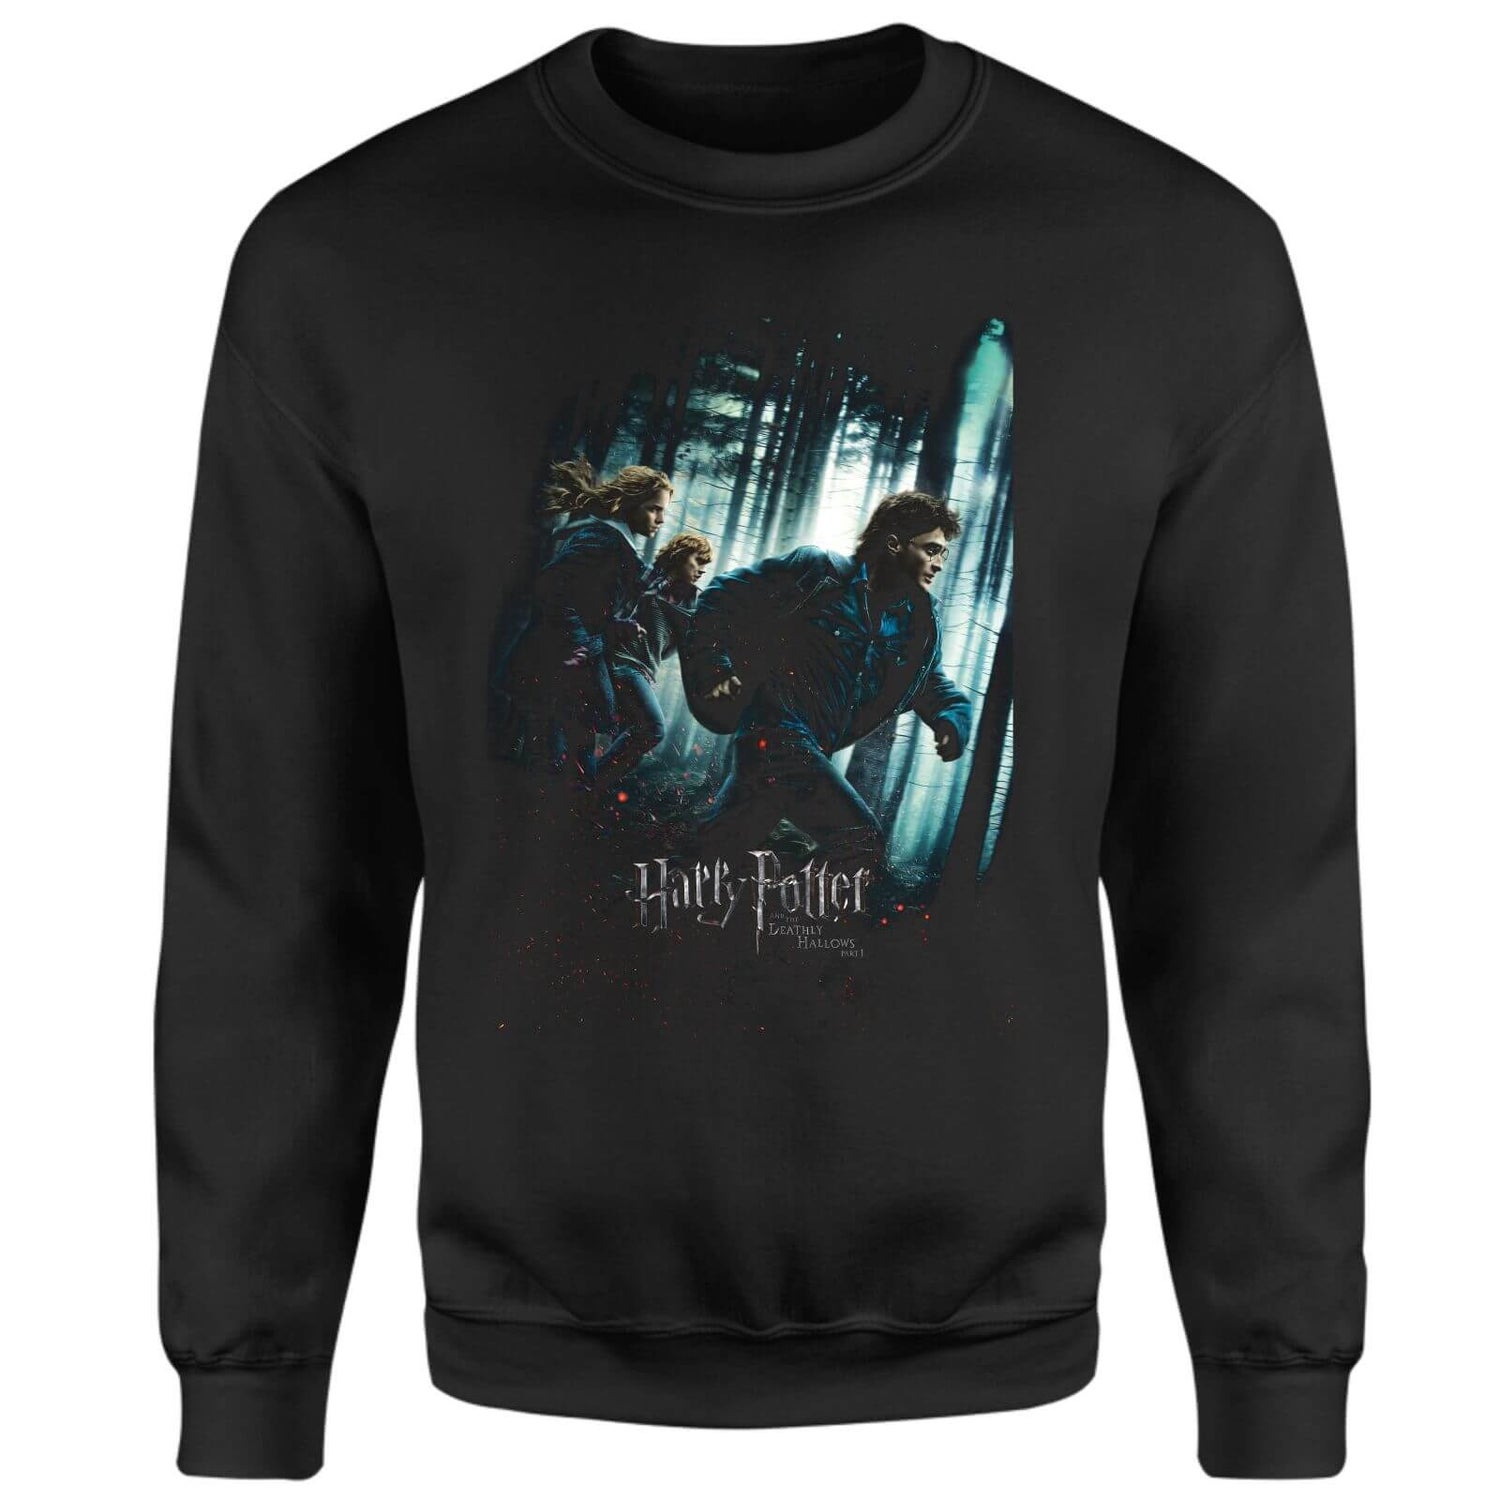 Harry Potter Deathly Hallows Part 1 Sweatshirt - Black